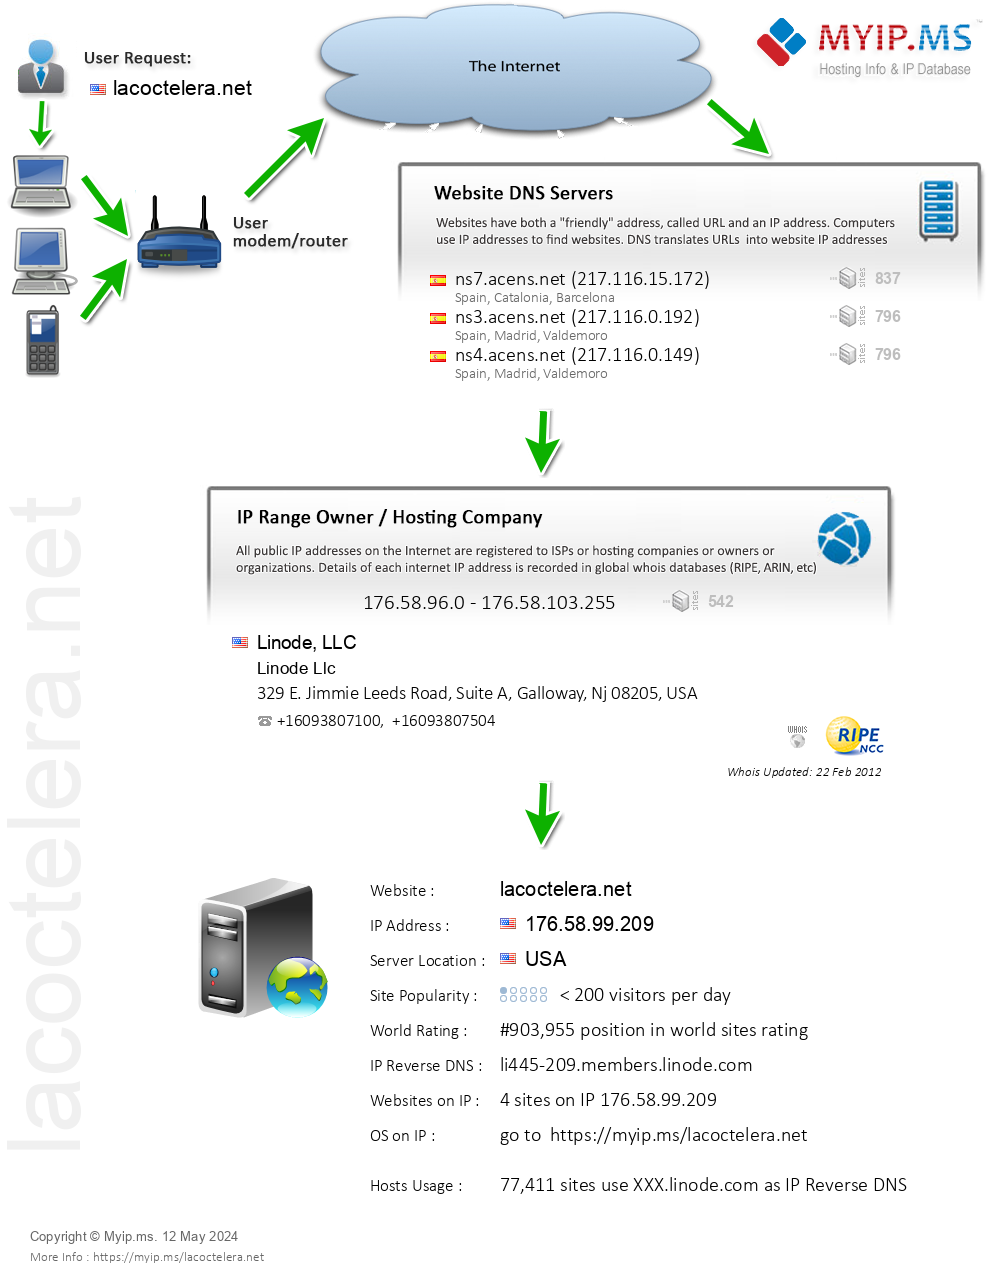 Lacoctelera.net - Website Hosting Visual IP Diagram